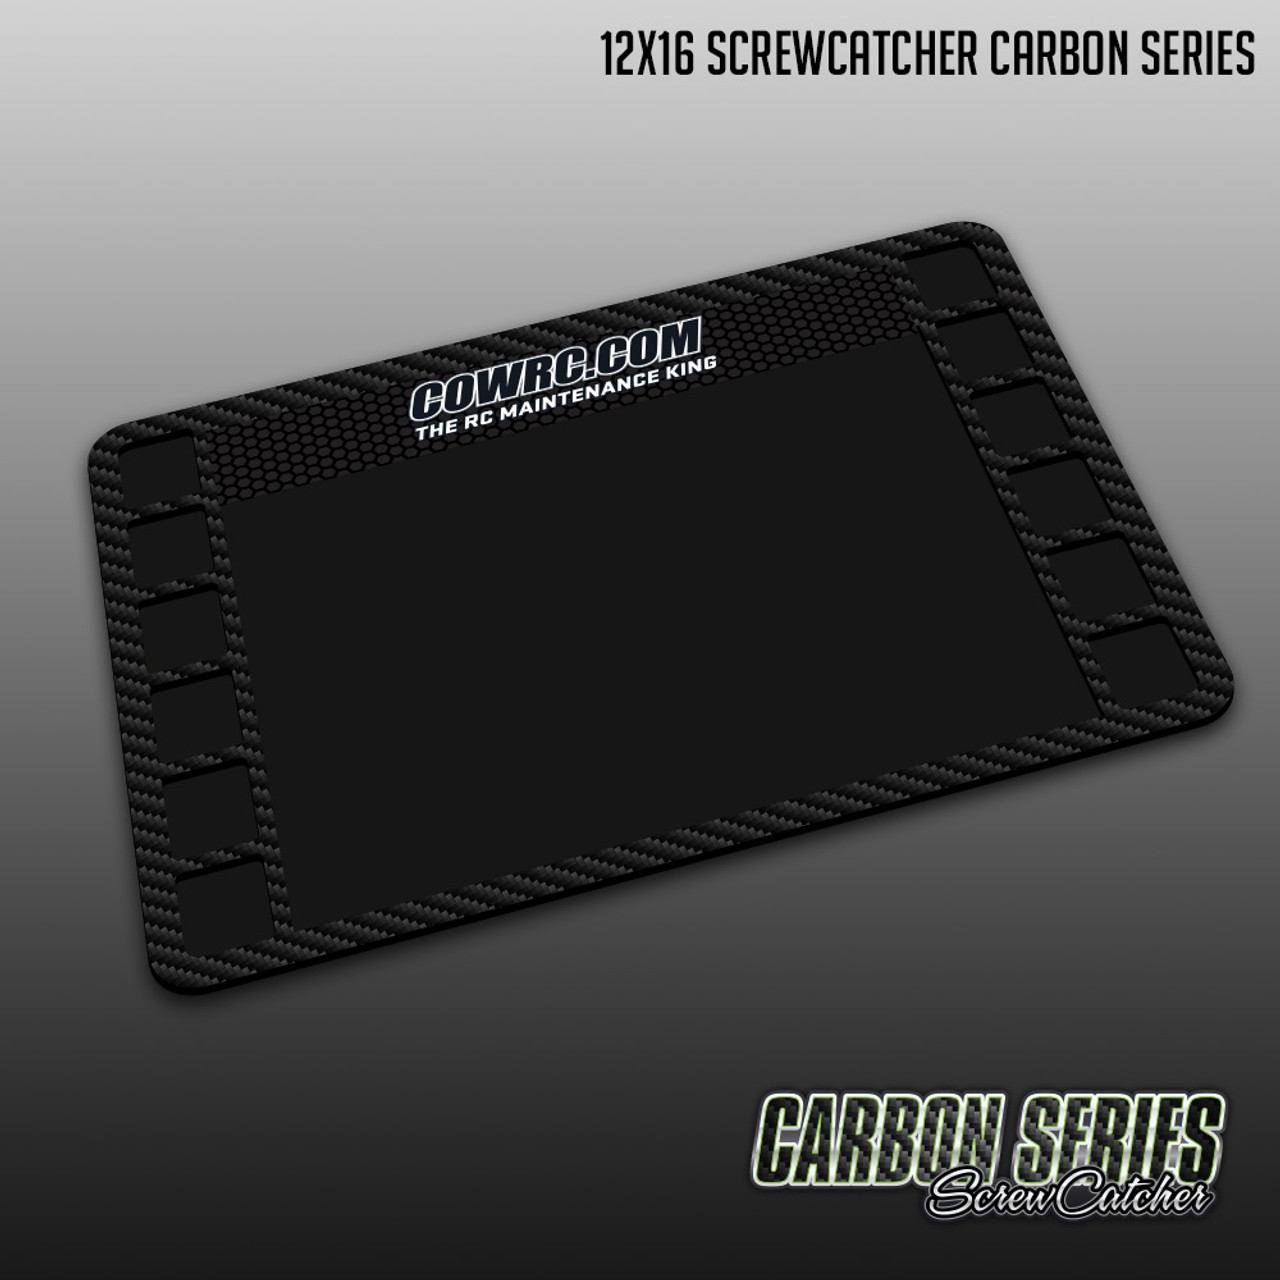 12" x 16" Screw Catcher Carbon Series